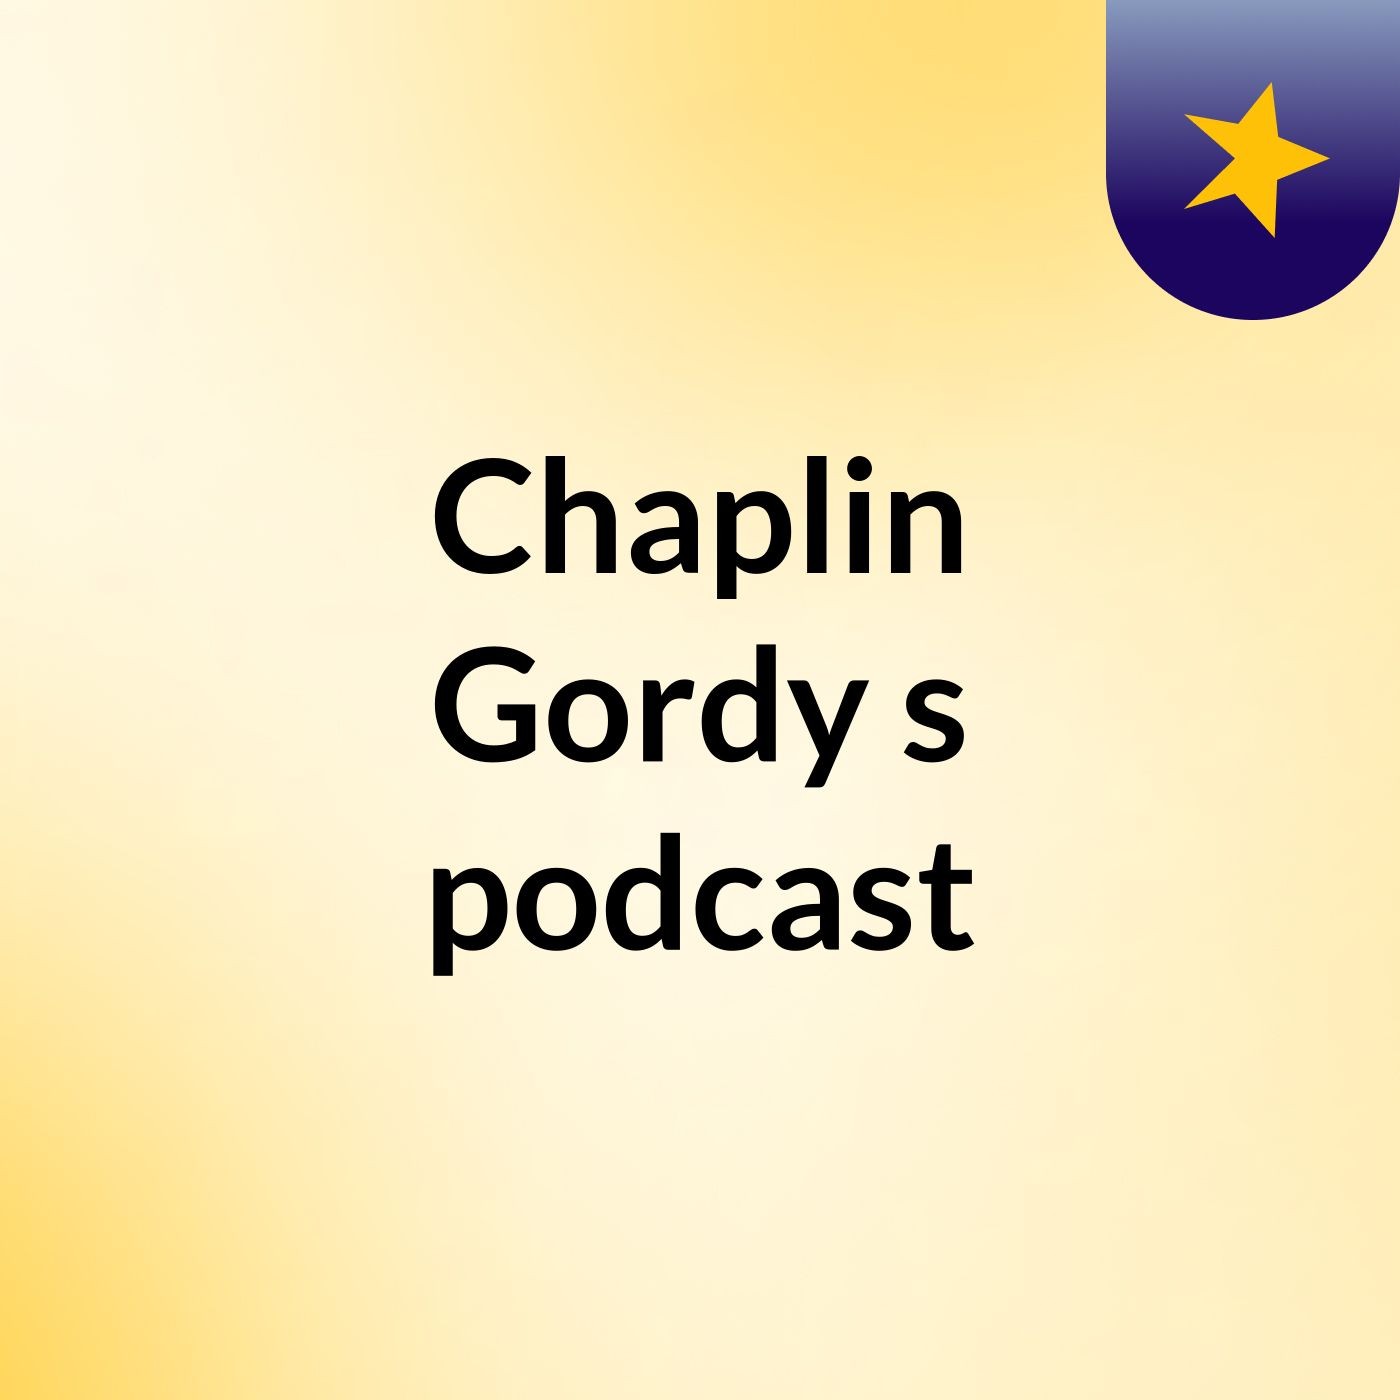 Chaplin Gordy's podcast